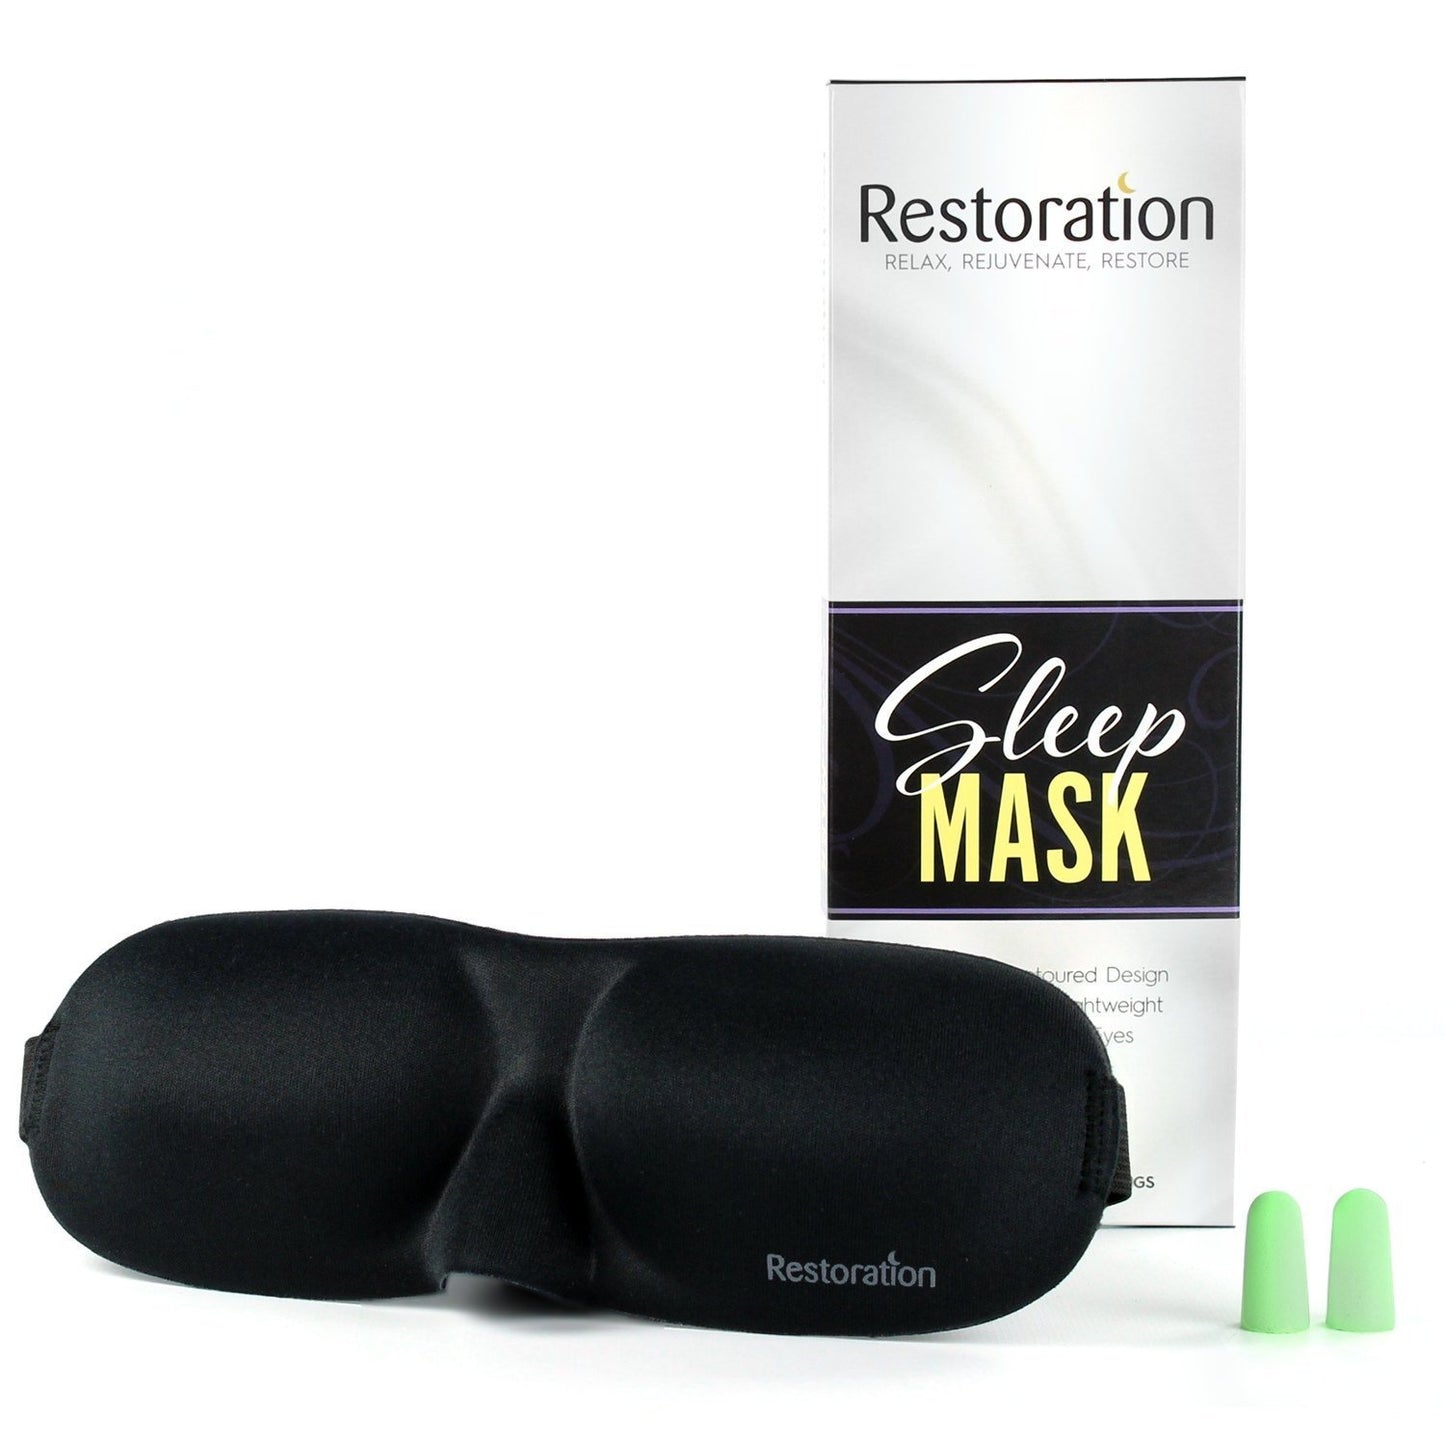 100% Natural Silk Sleep Mask/Eye Mask with 2 Adjustable Straps